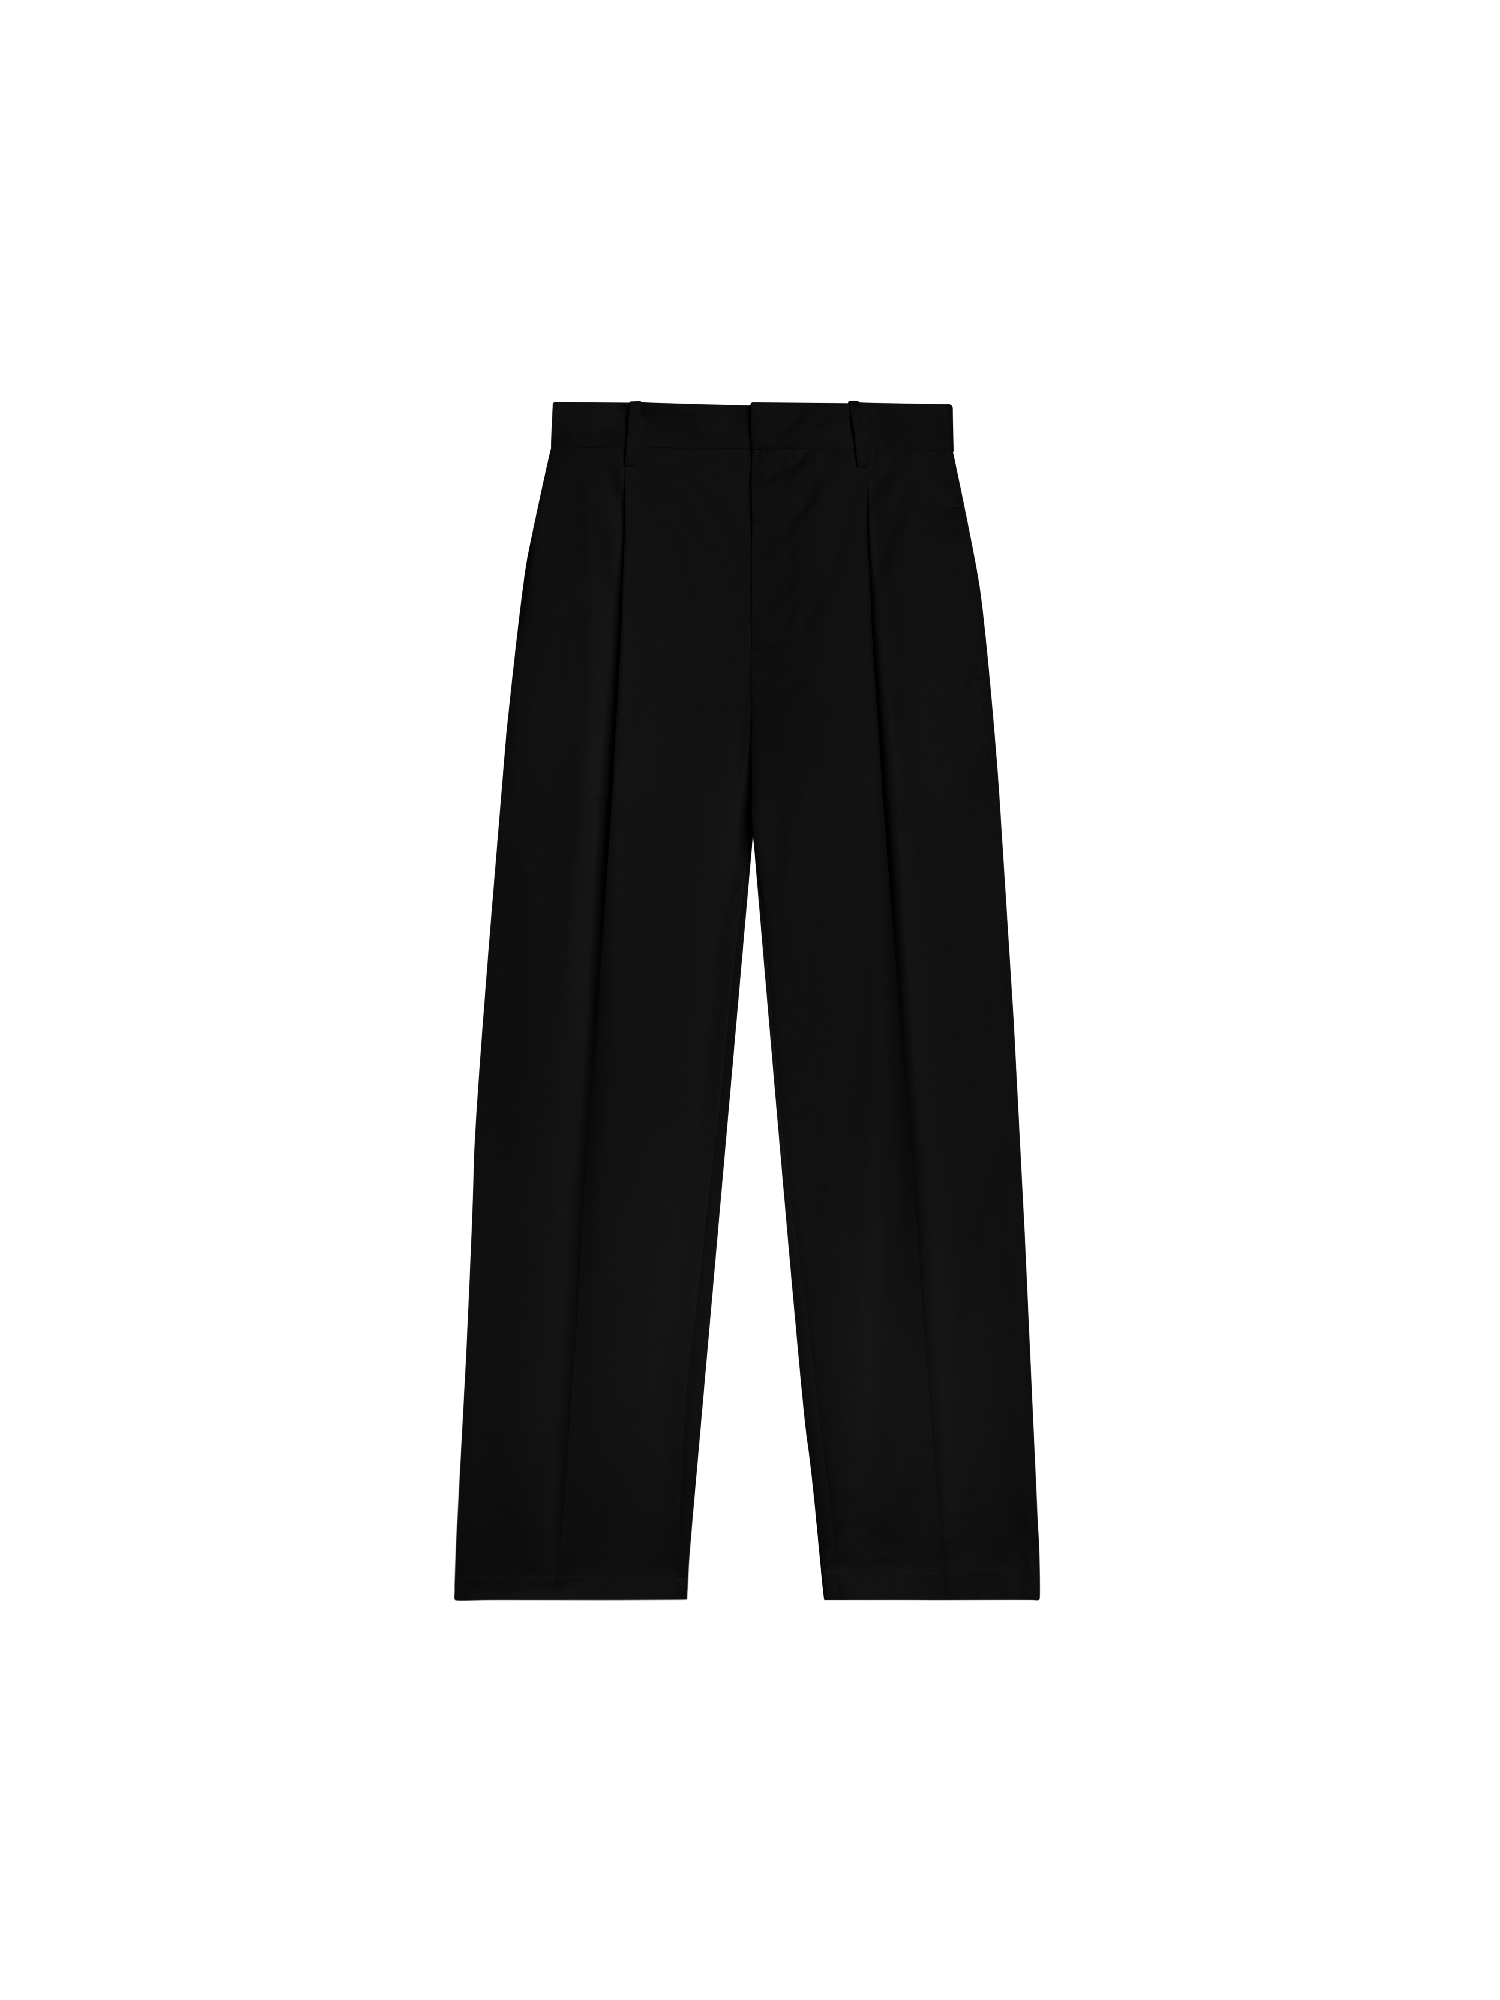 Men's Cotton Tailored Trousers - Black - Pangaia